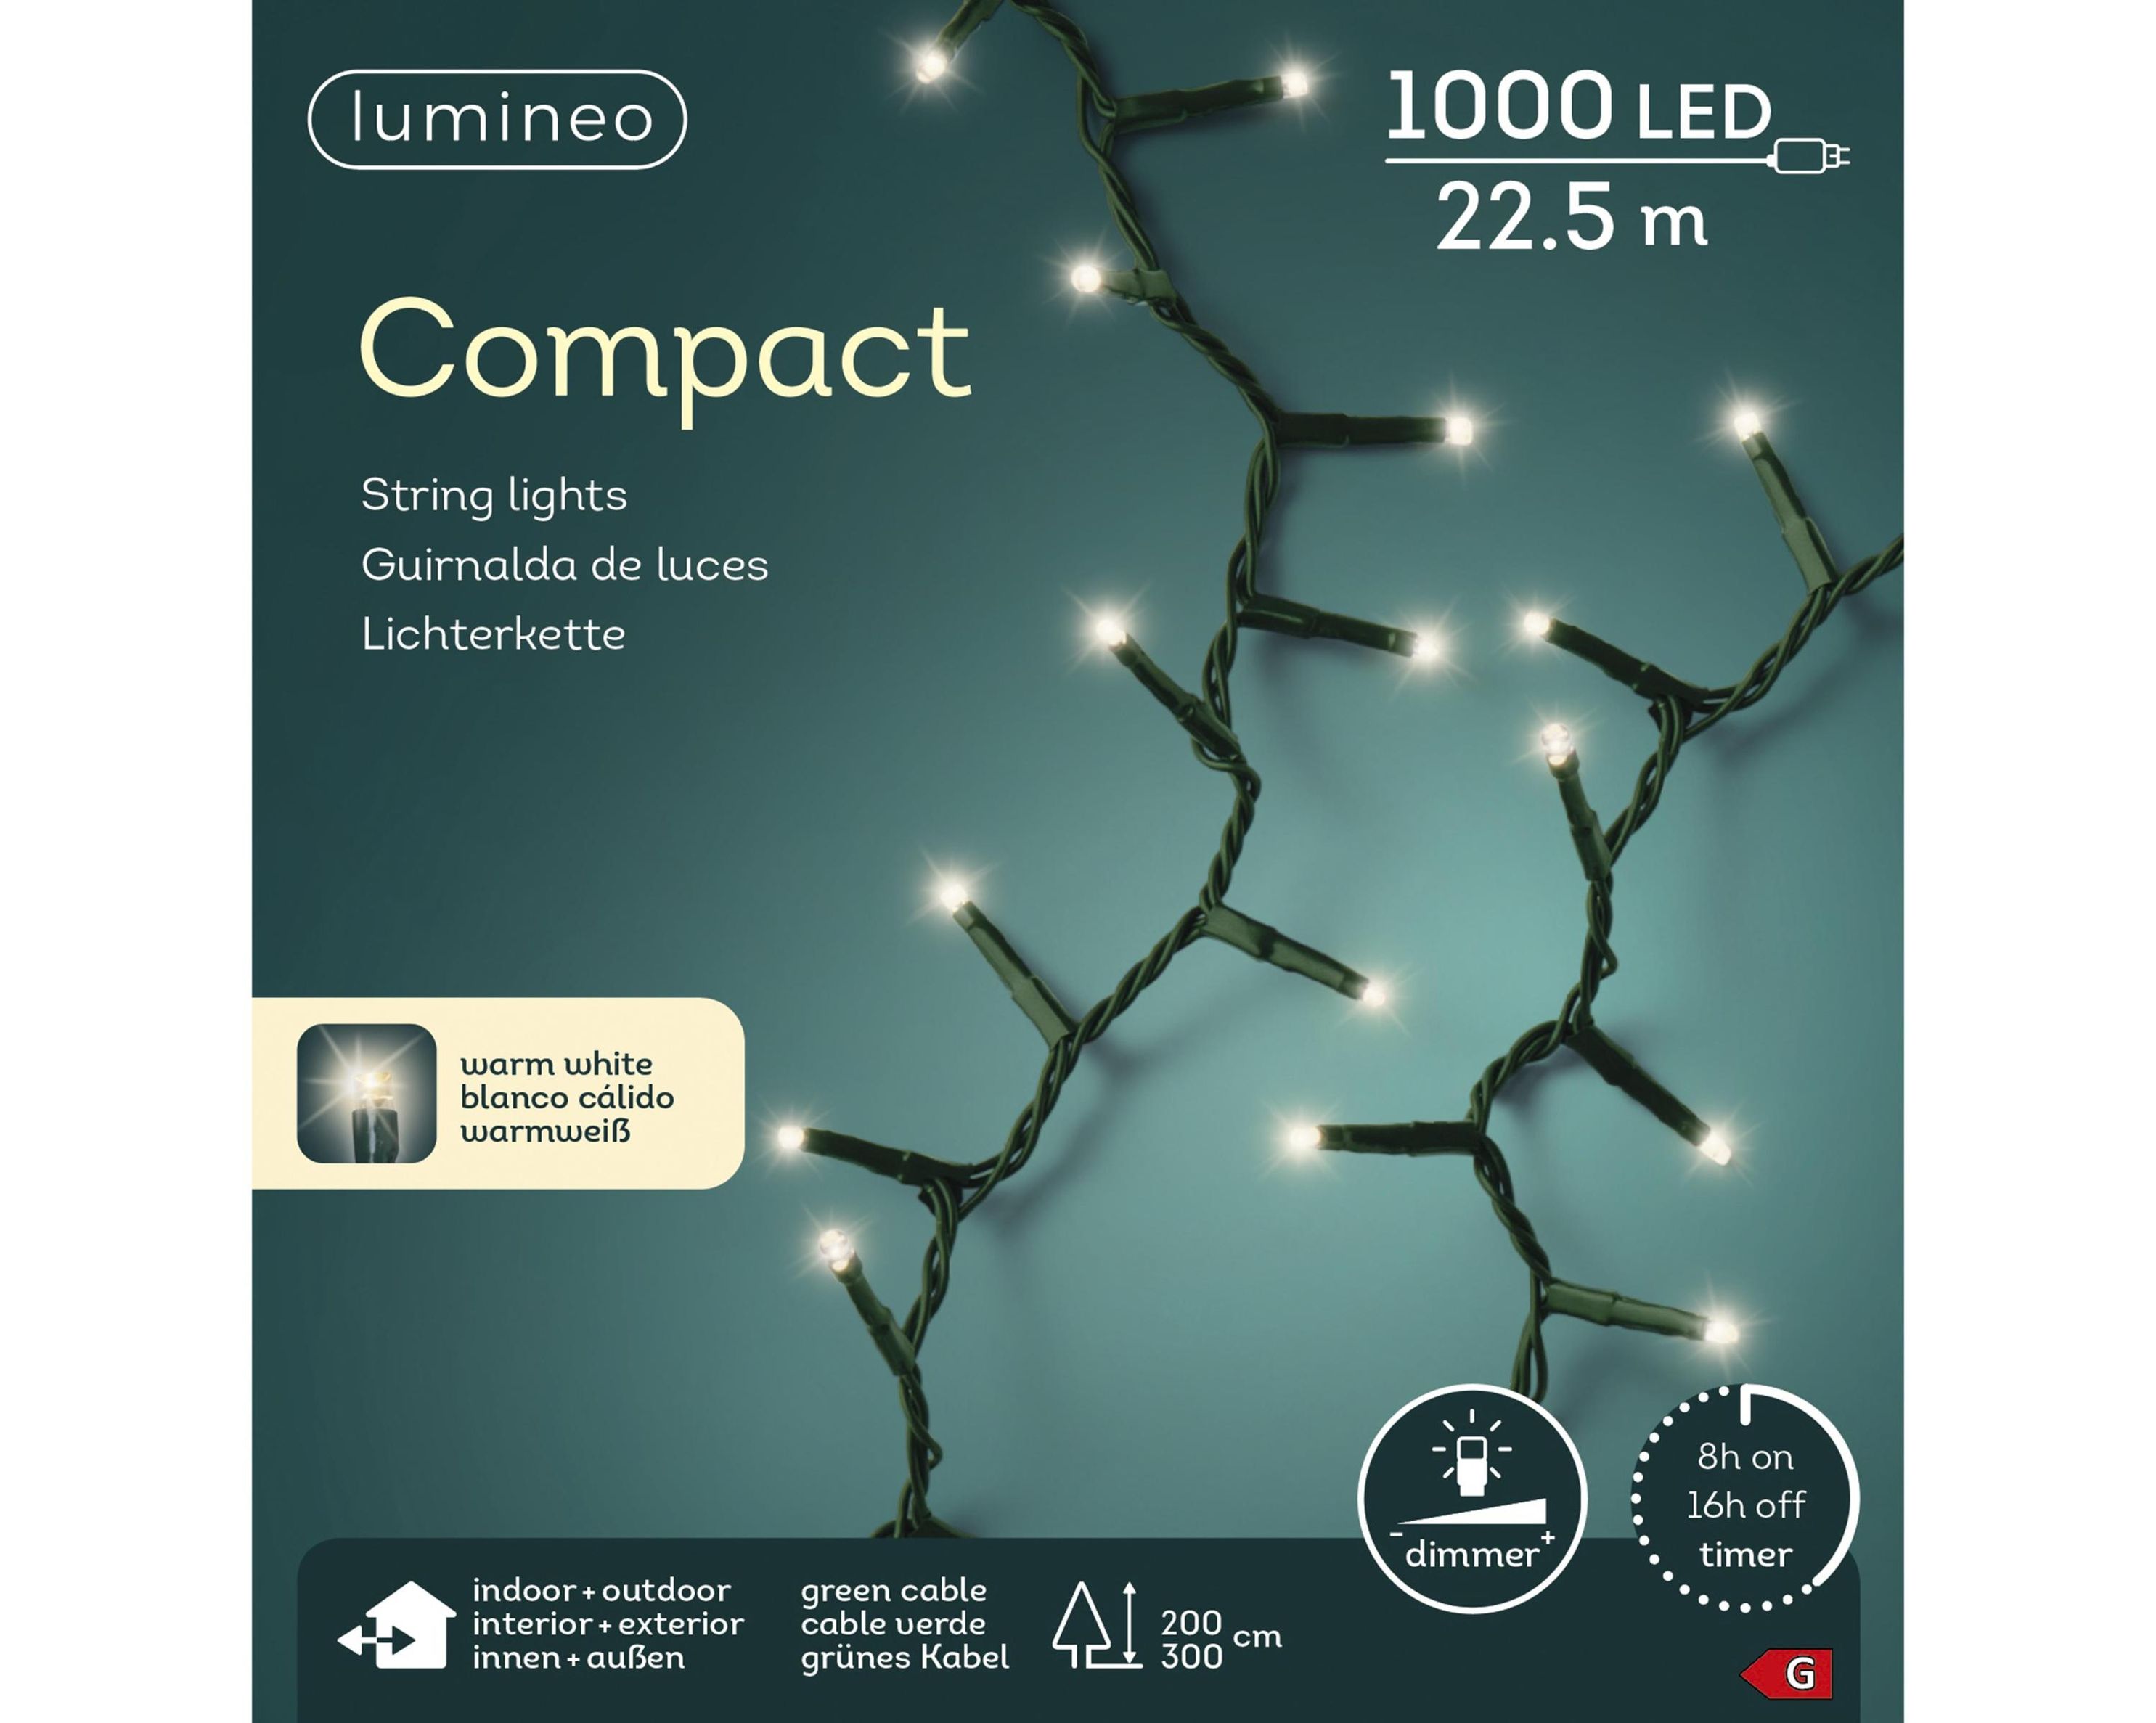 Lumineo LED-Lichterkette Compact, warm white Größe: 1000LEDs | Weltbild.at